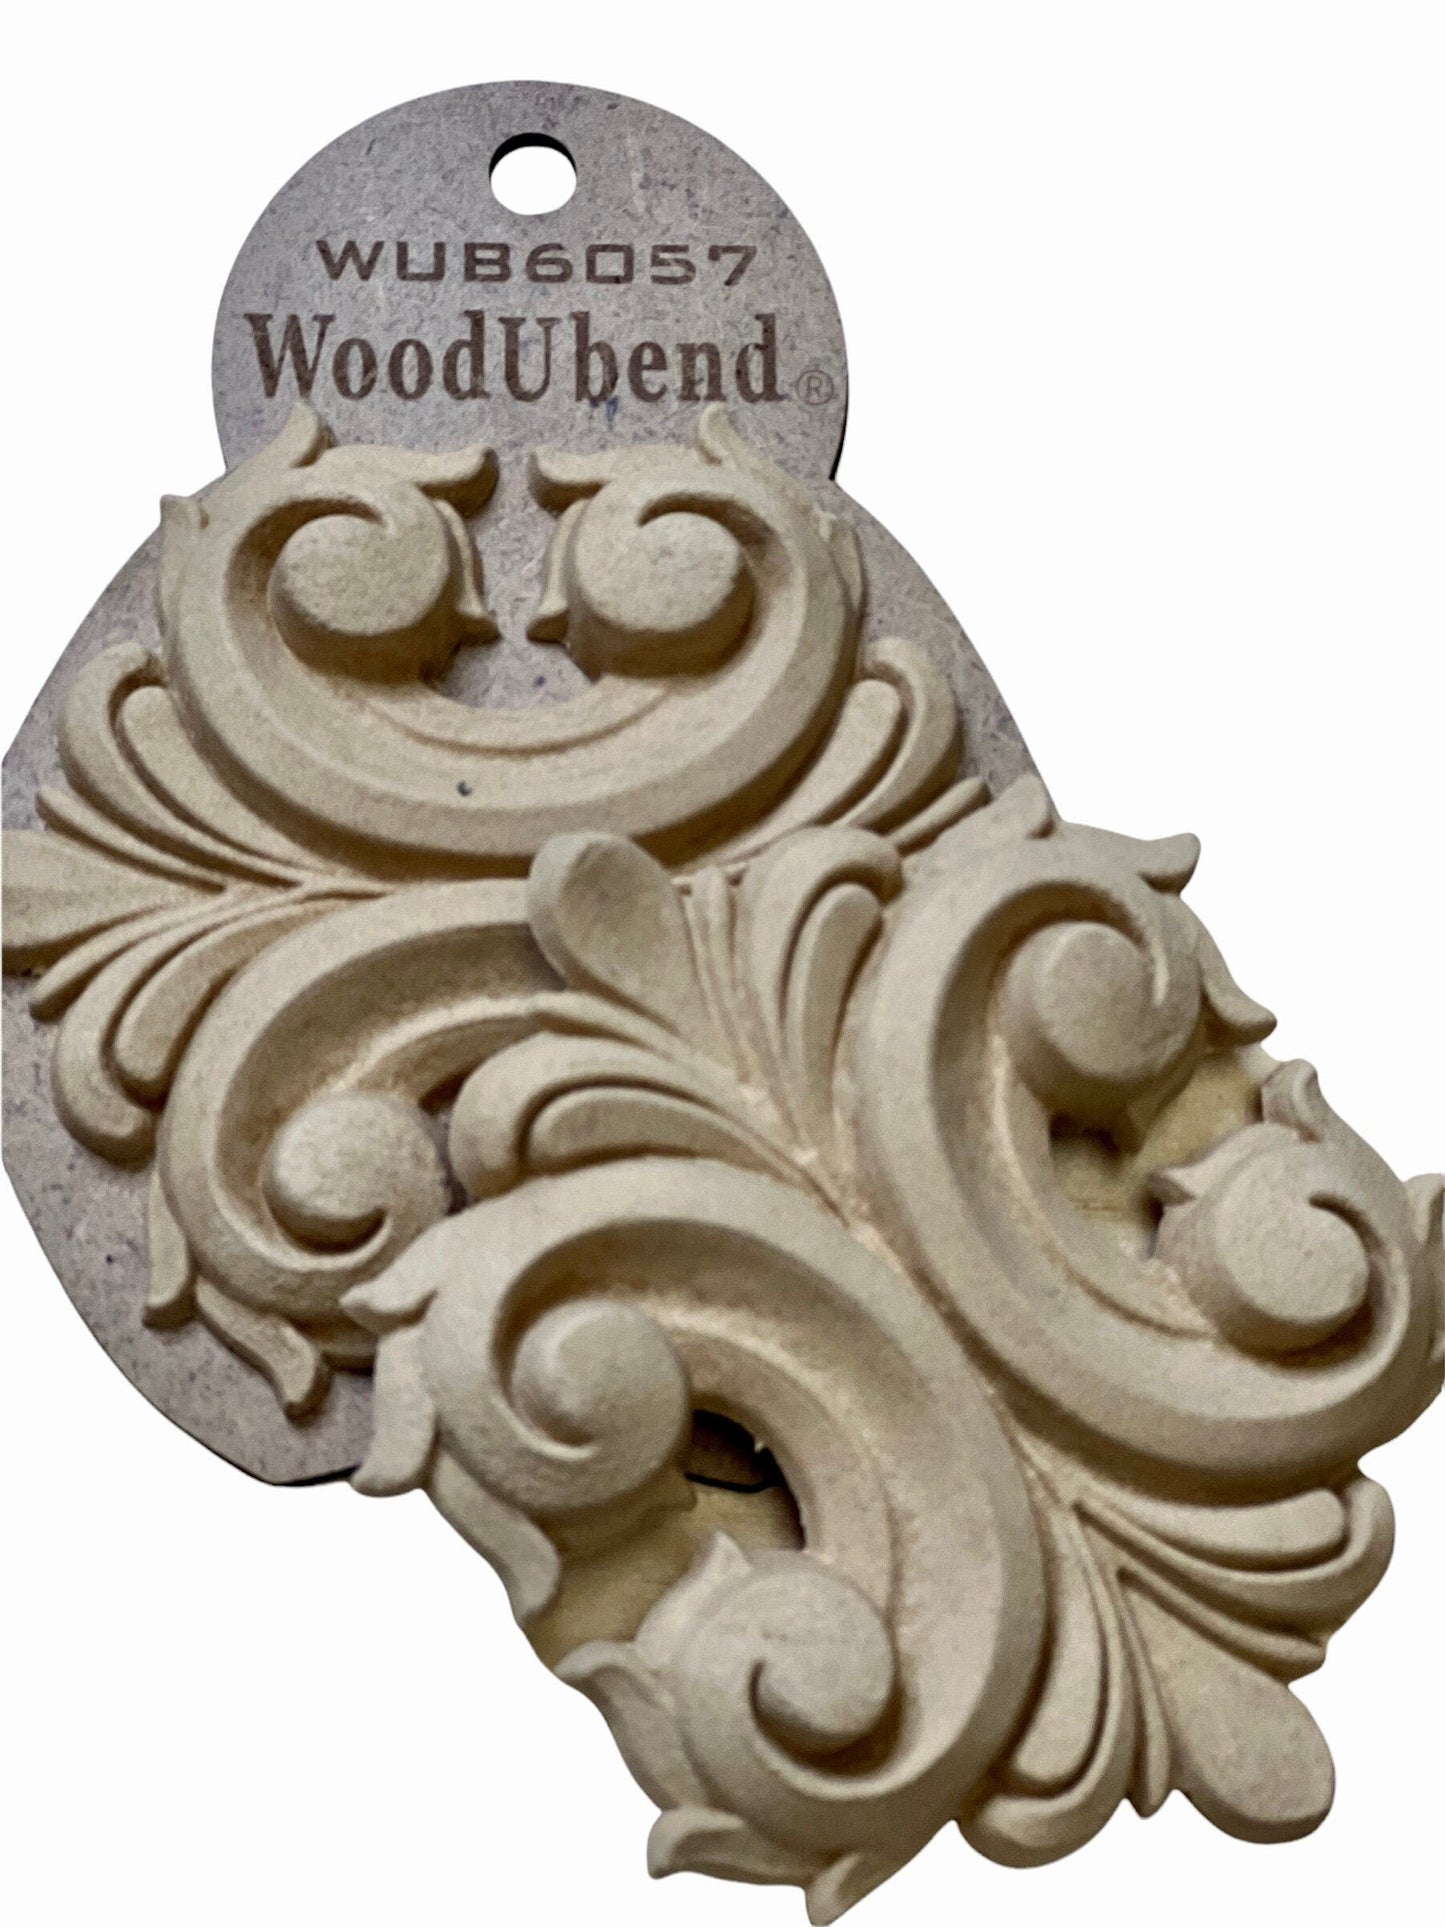 Woodubend one piece of bendable moulding 6057